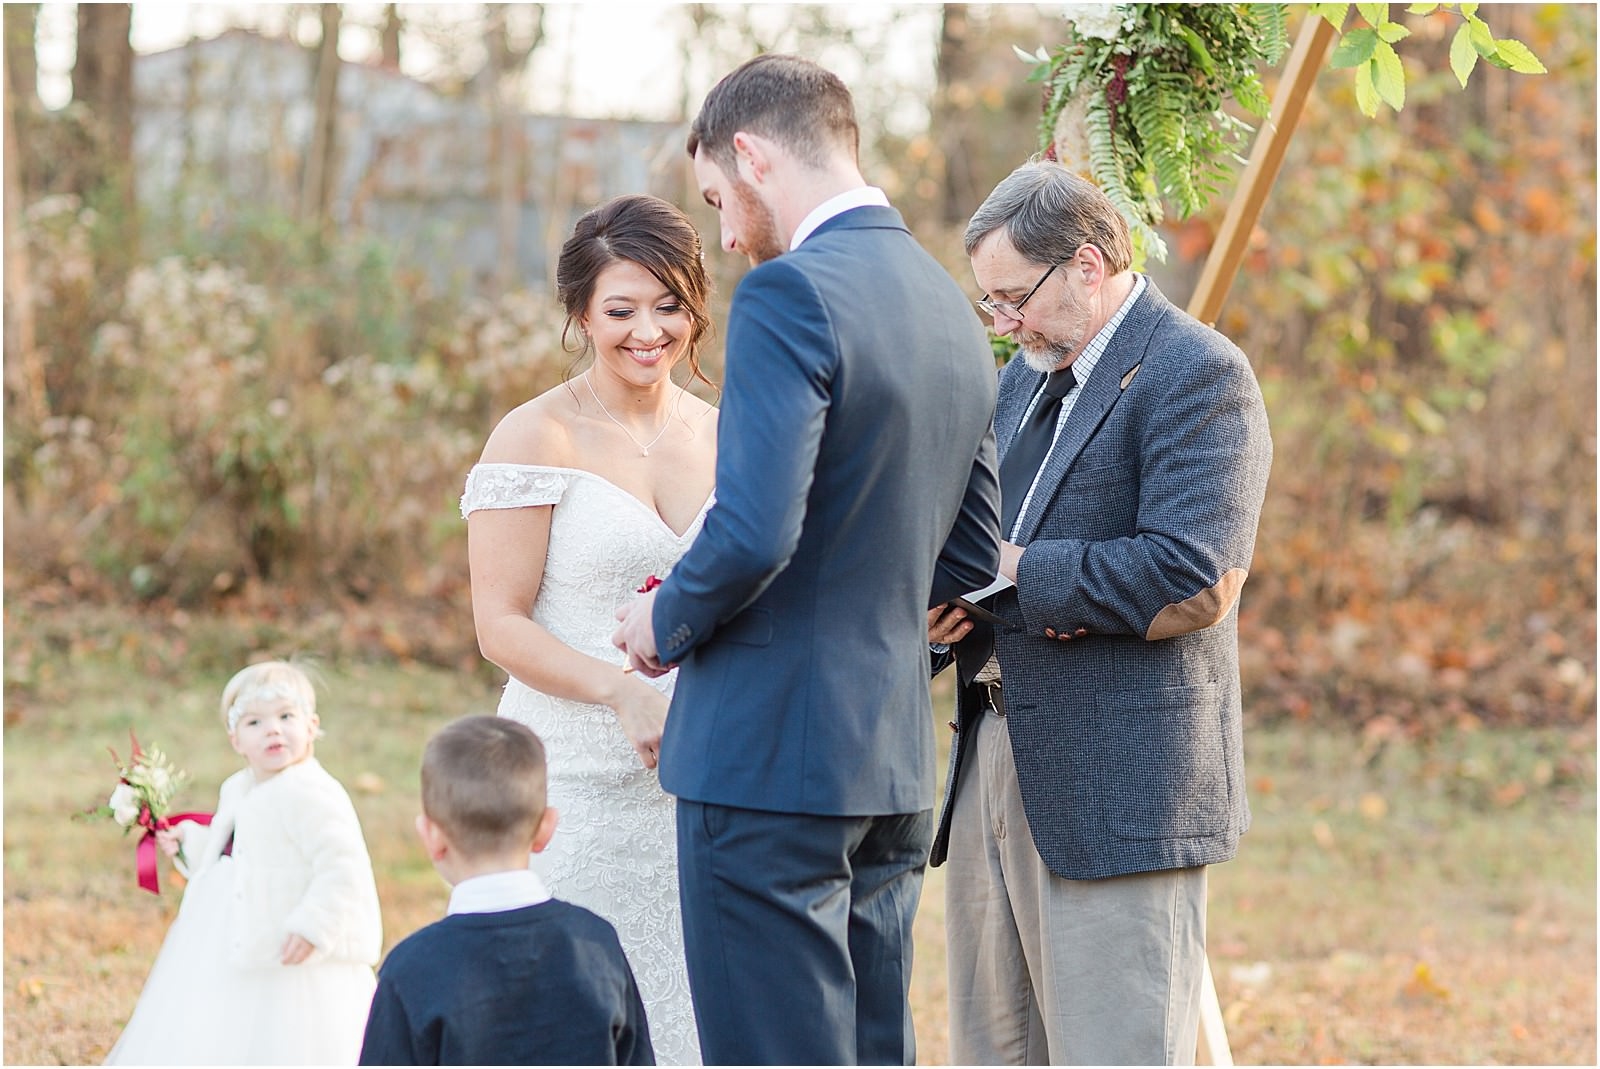 Walker and Alyssa's intimate fall wedding in Southern Indiana. | Wedding Photography | The Corner House Wedding | Southern Indiana Wedding | #fallwedding #intimatewedding | 067.jpg